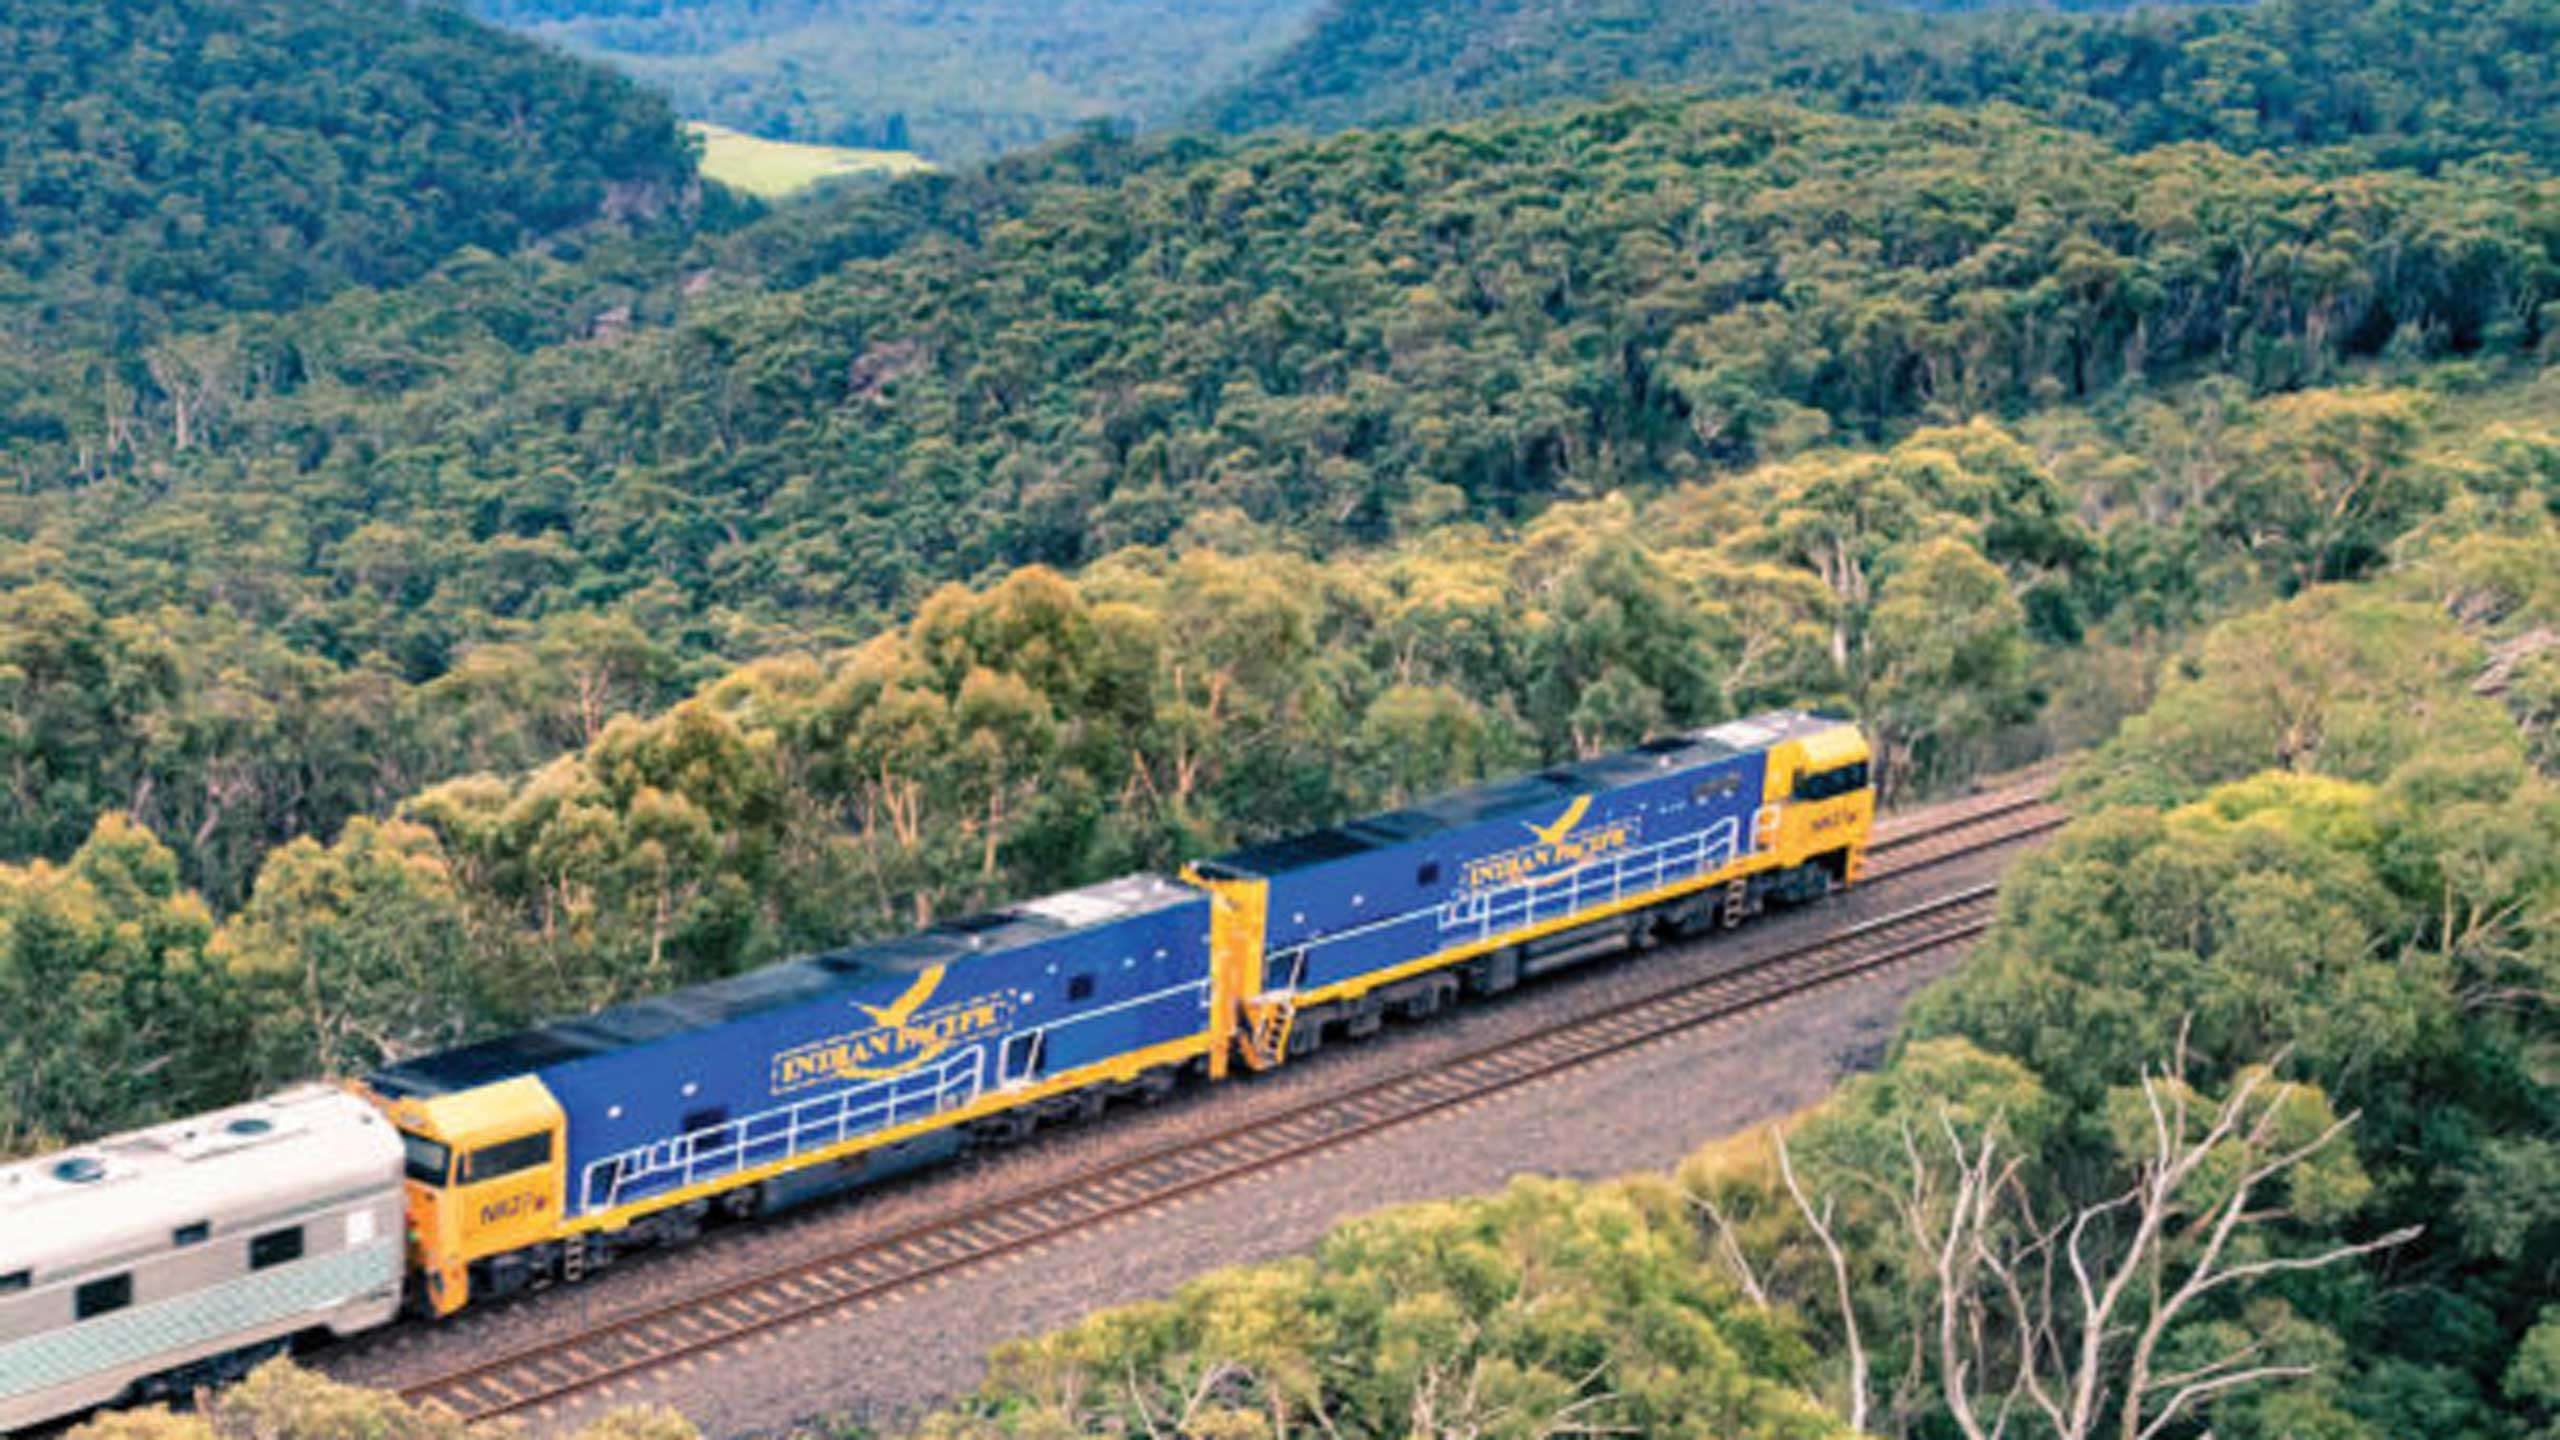 scenic train journeys from sydney